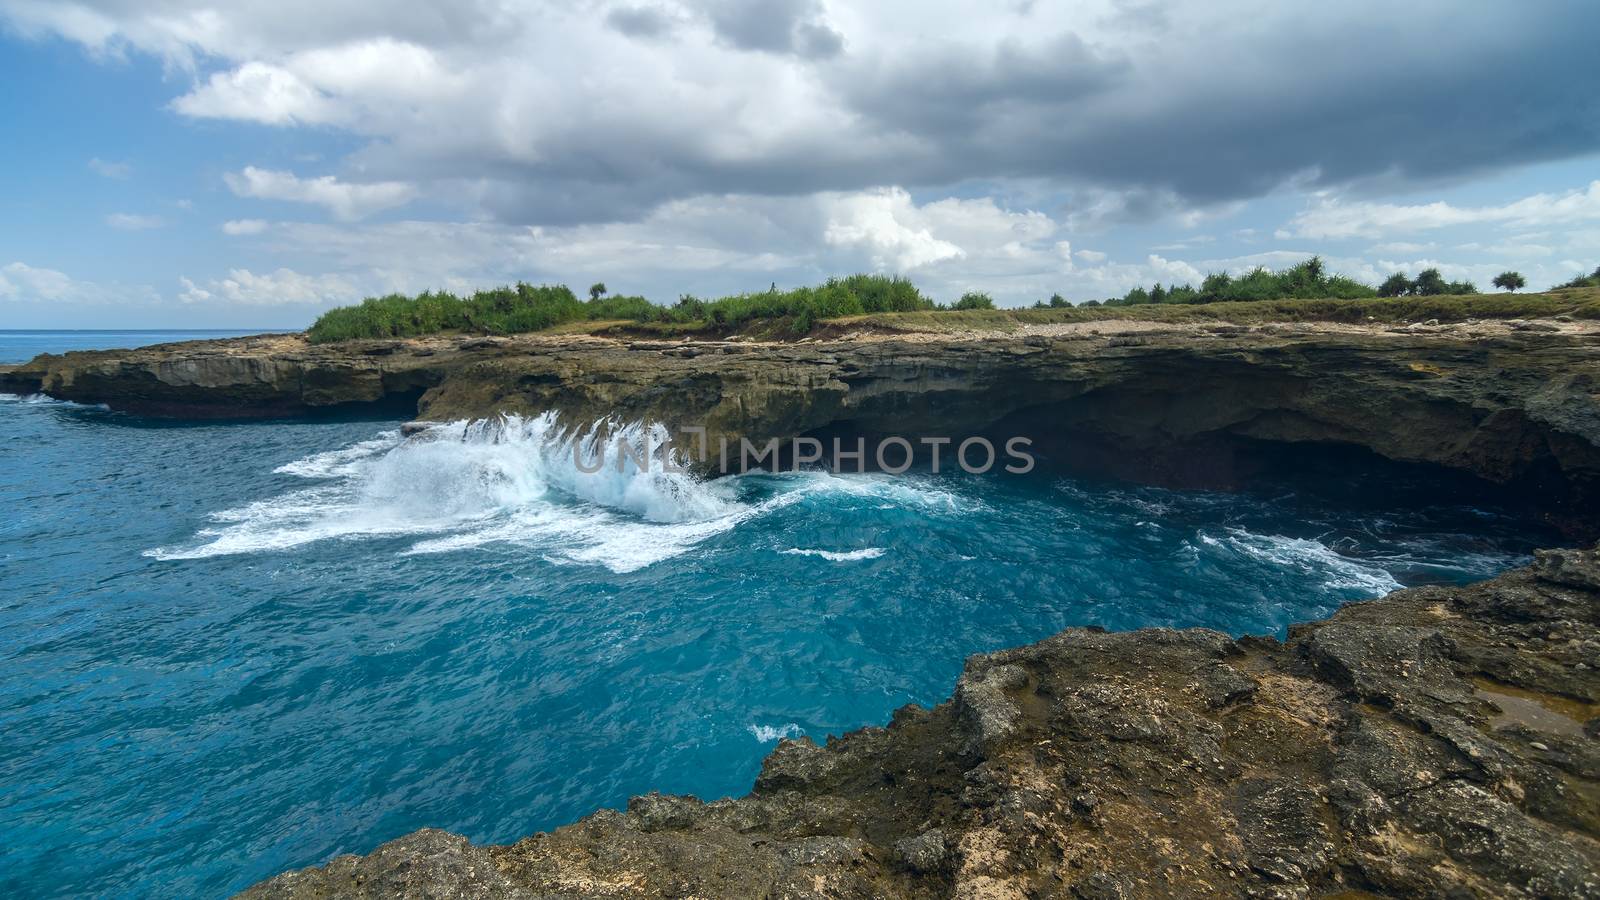 Waves on the rocks near the island of Lembongan near Bali, Indonesia